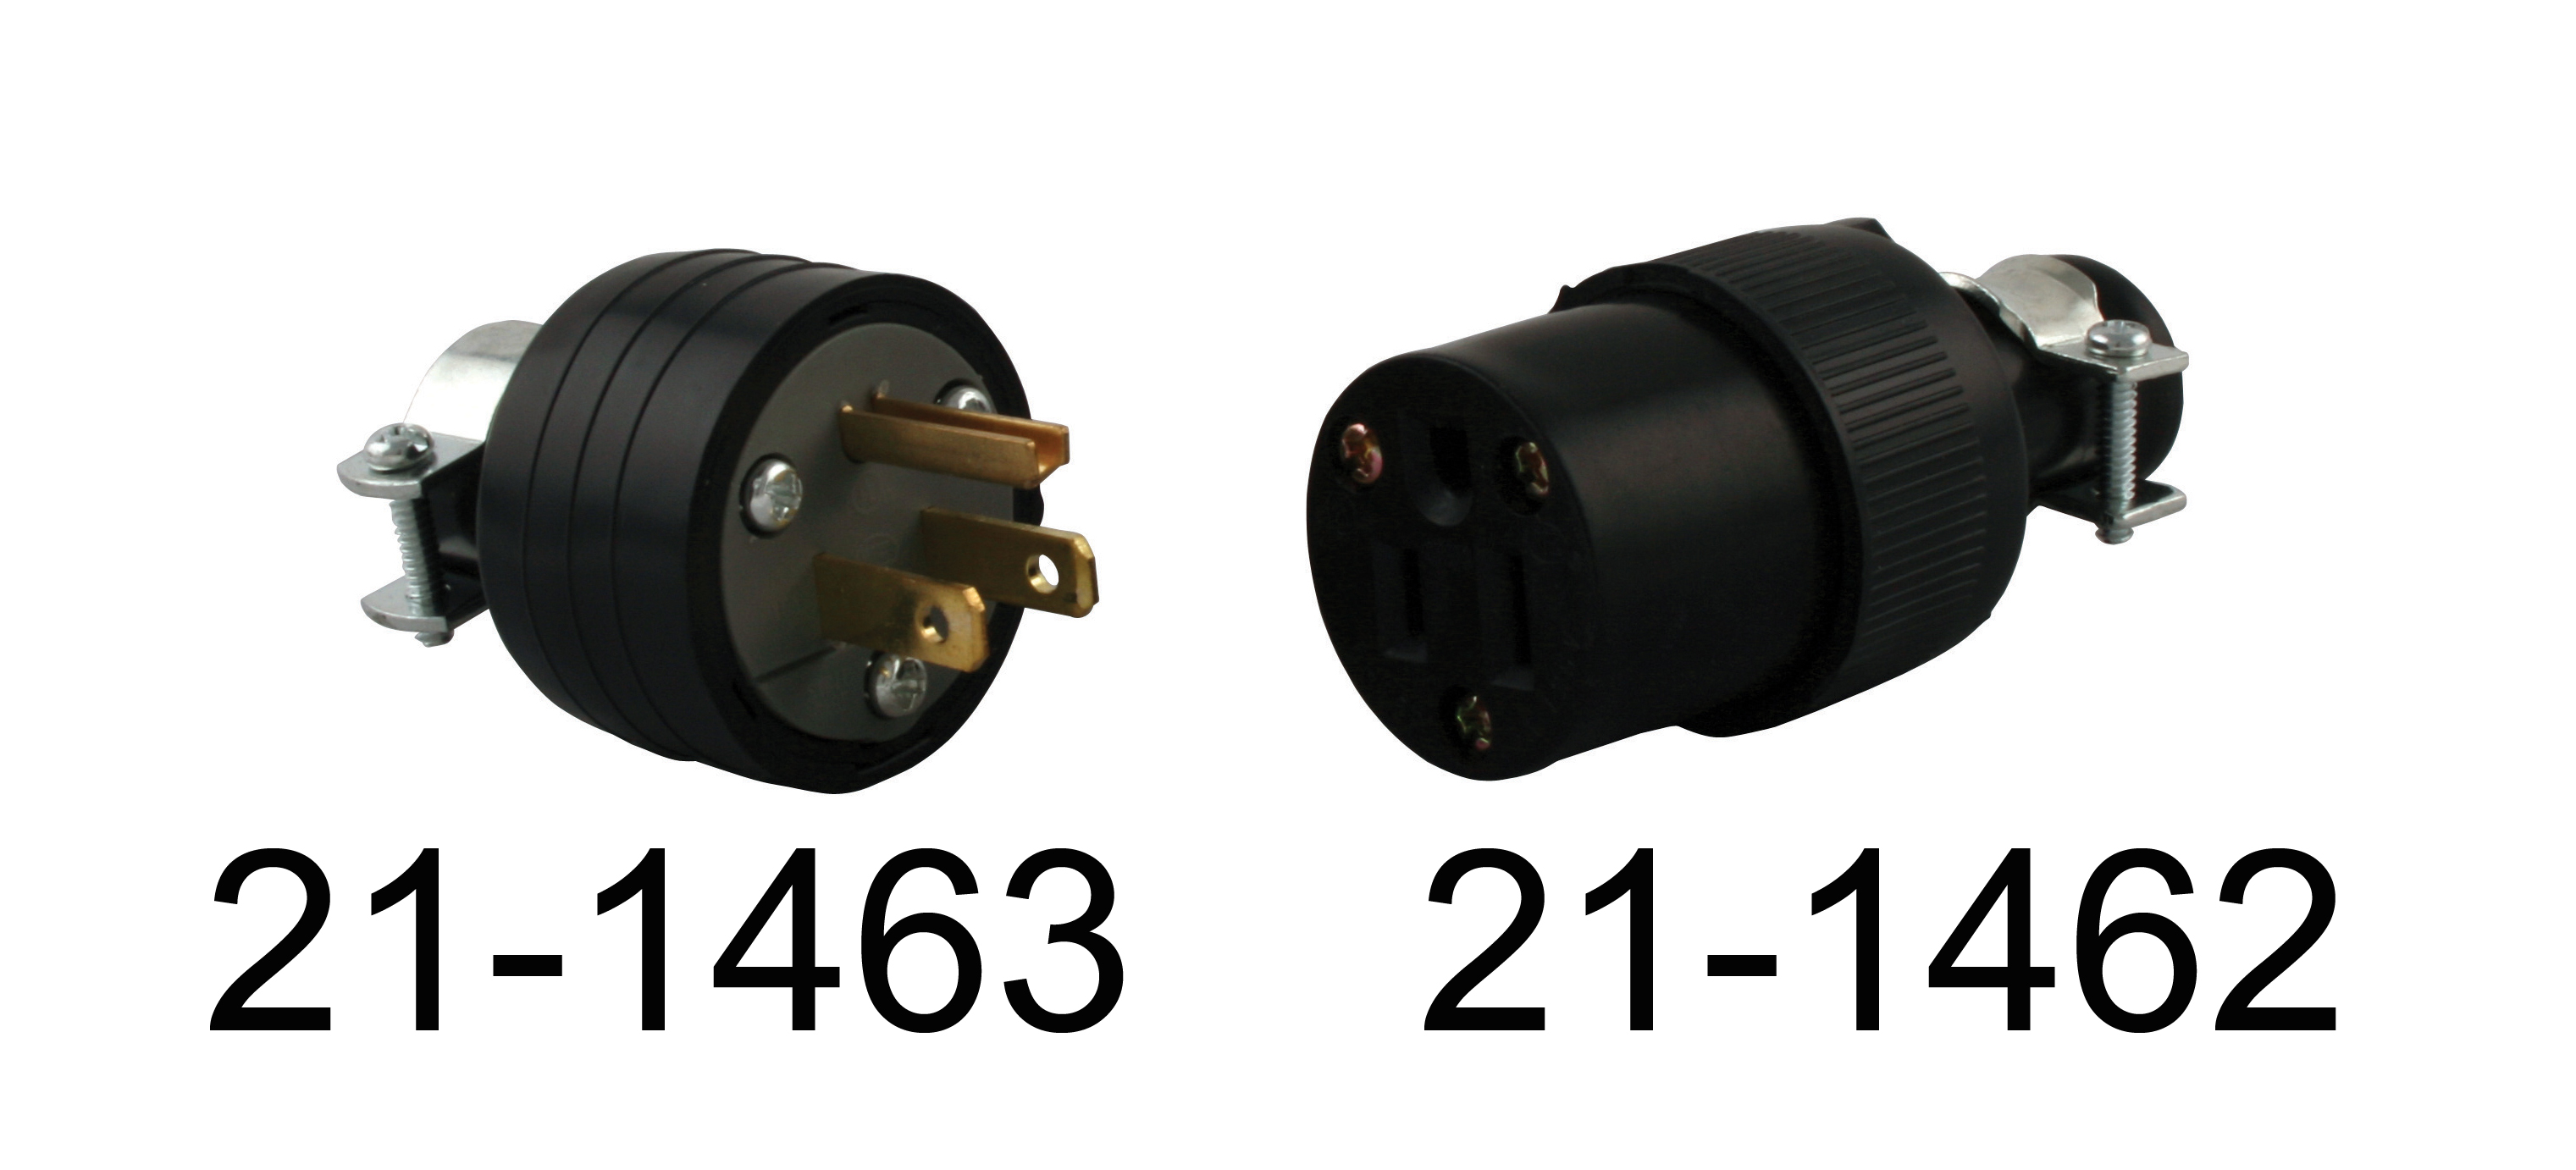 835-515CA 15 Amp 3 Prong Plug Connectors Male & Female, 125 Volt